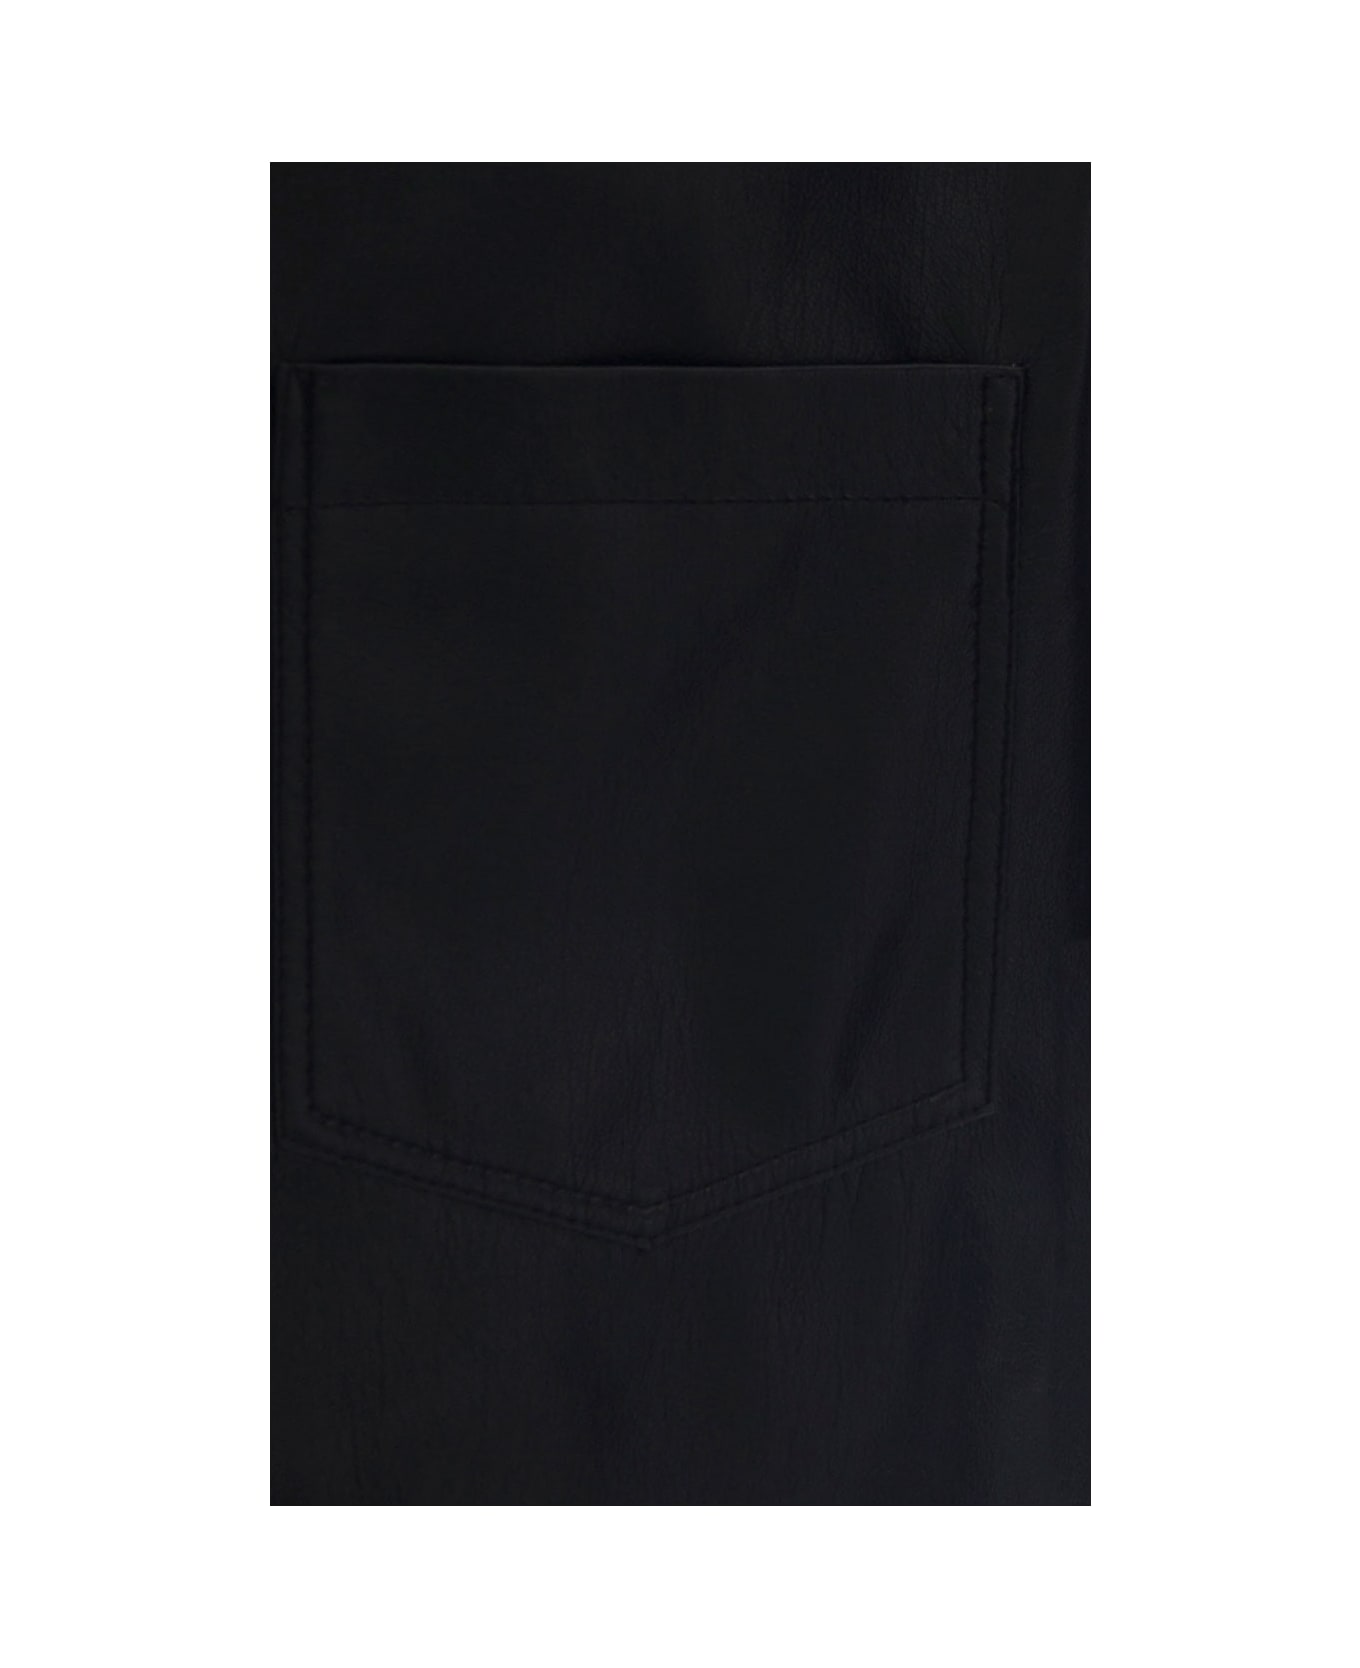 Nanushka 'bodil' Black Short Sleeve Shirt In Faux Leather Man - Black シャツ